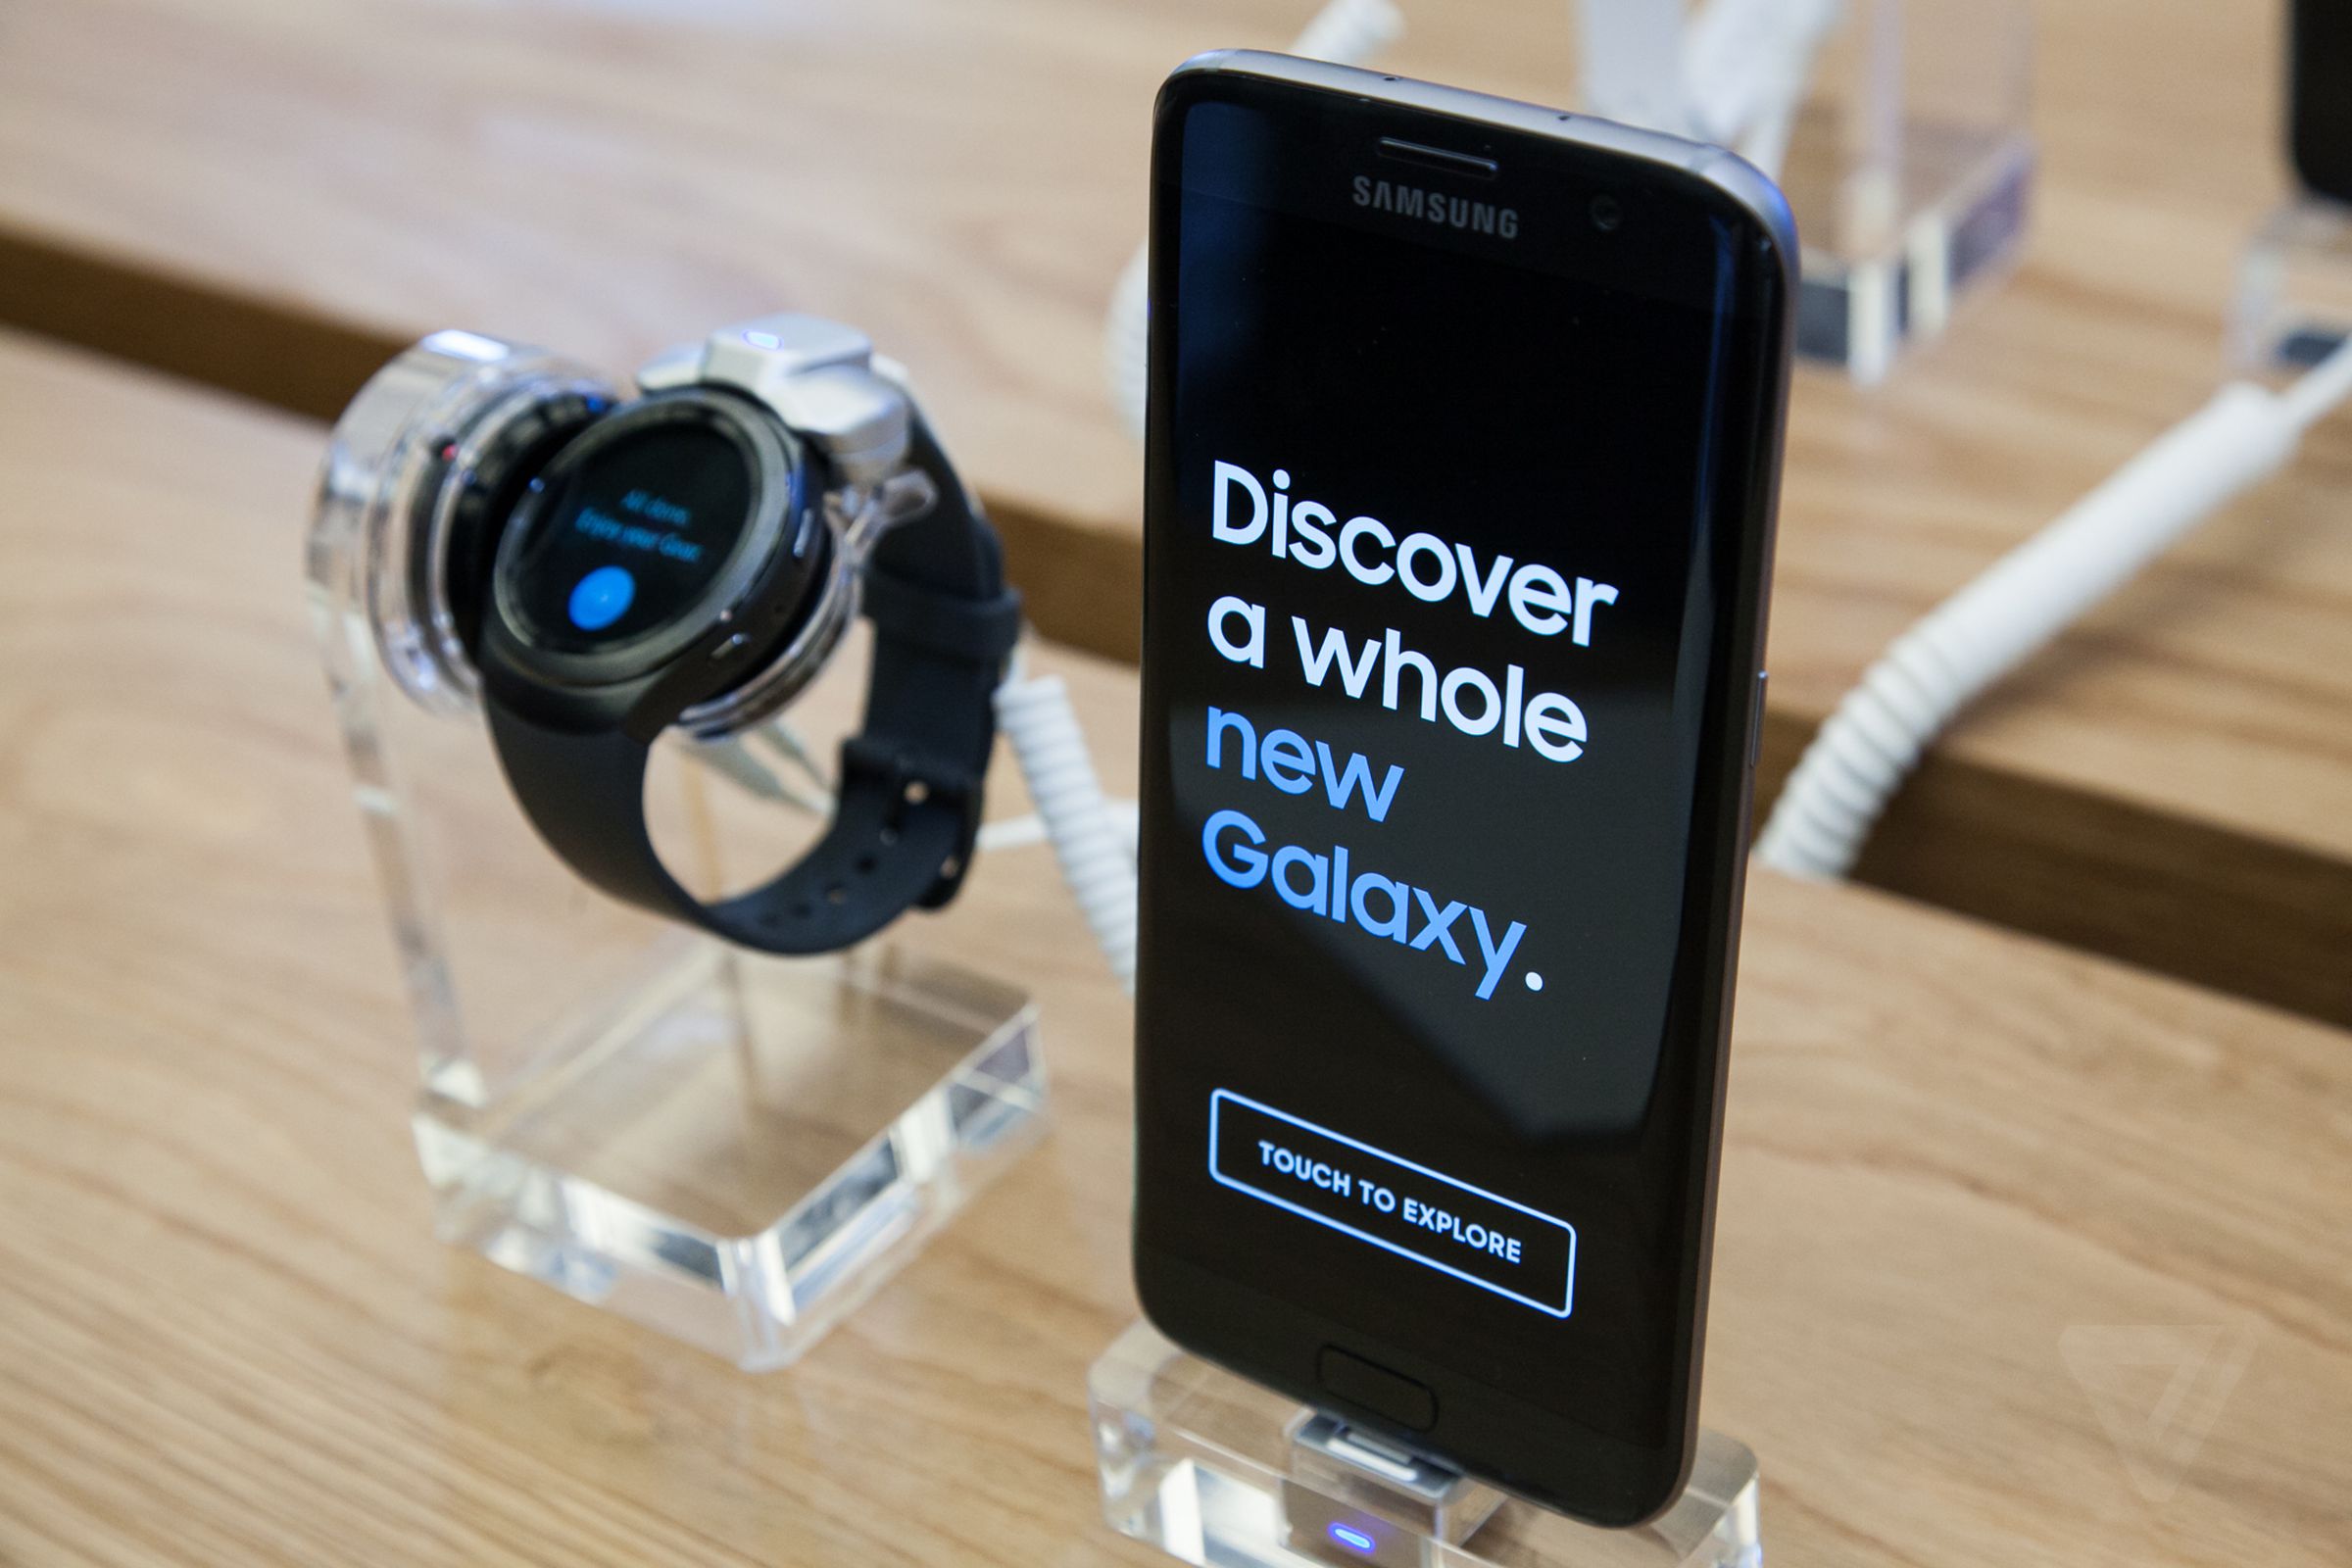 Samsung Galaxy S7 Edge and Gear S2 smartwatch.